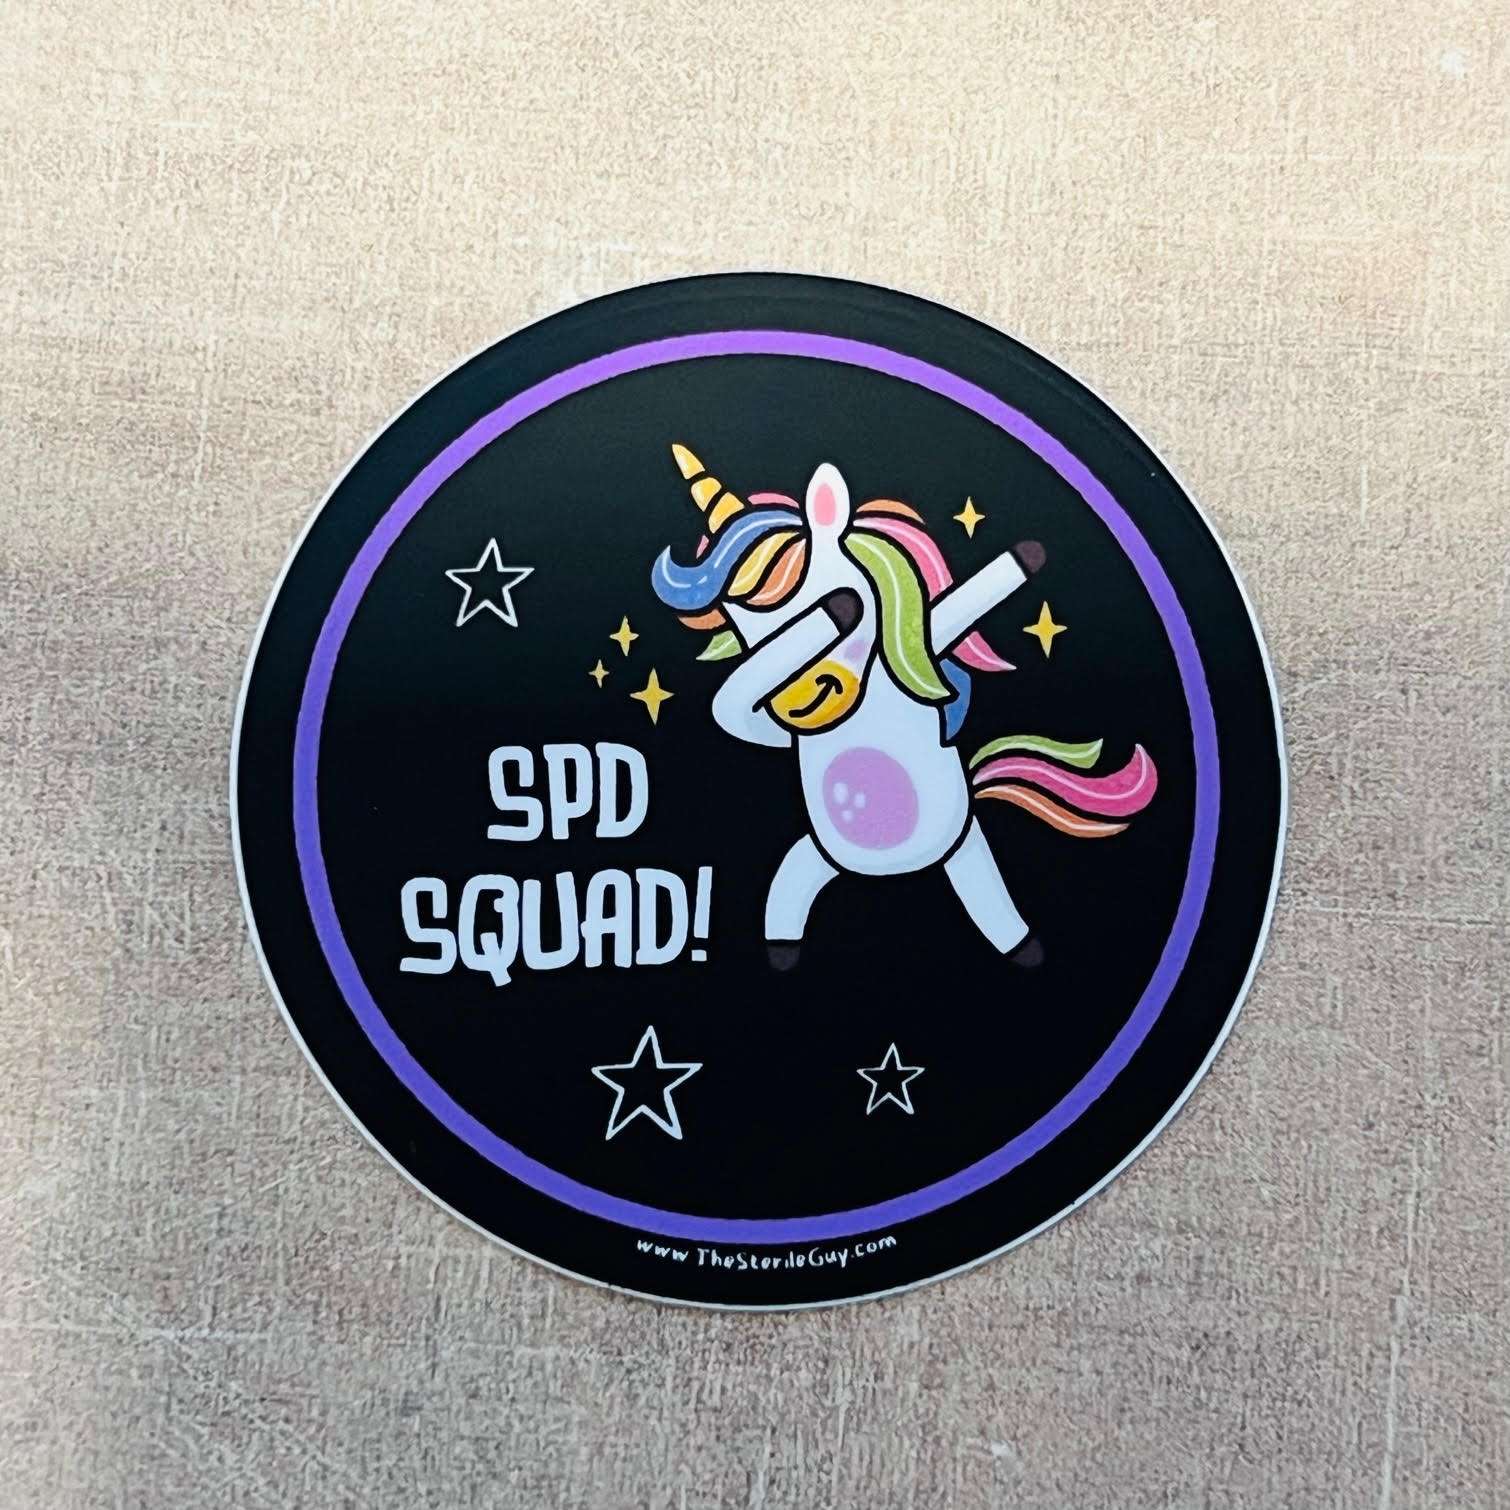 SPD Squad Sticker - The Sterile Guy LLC